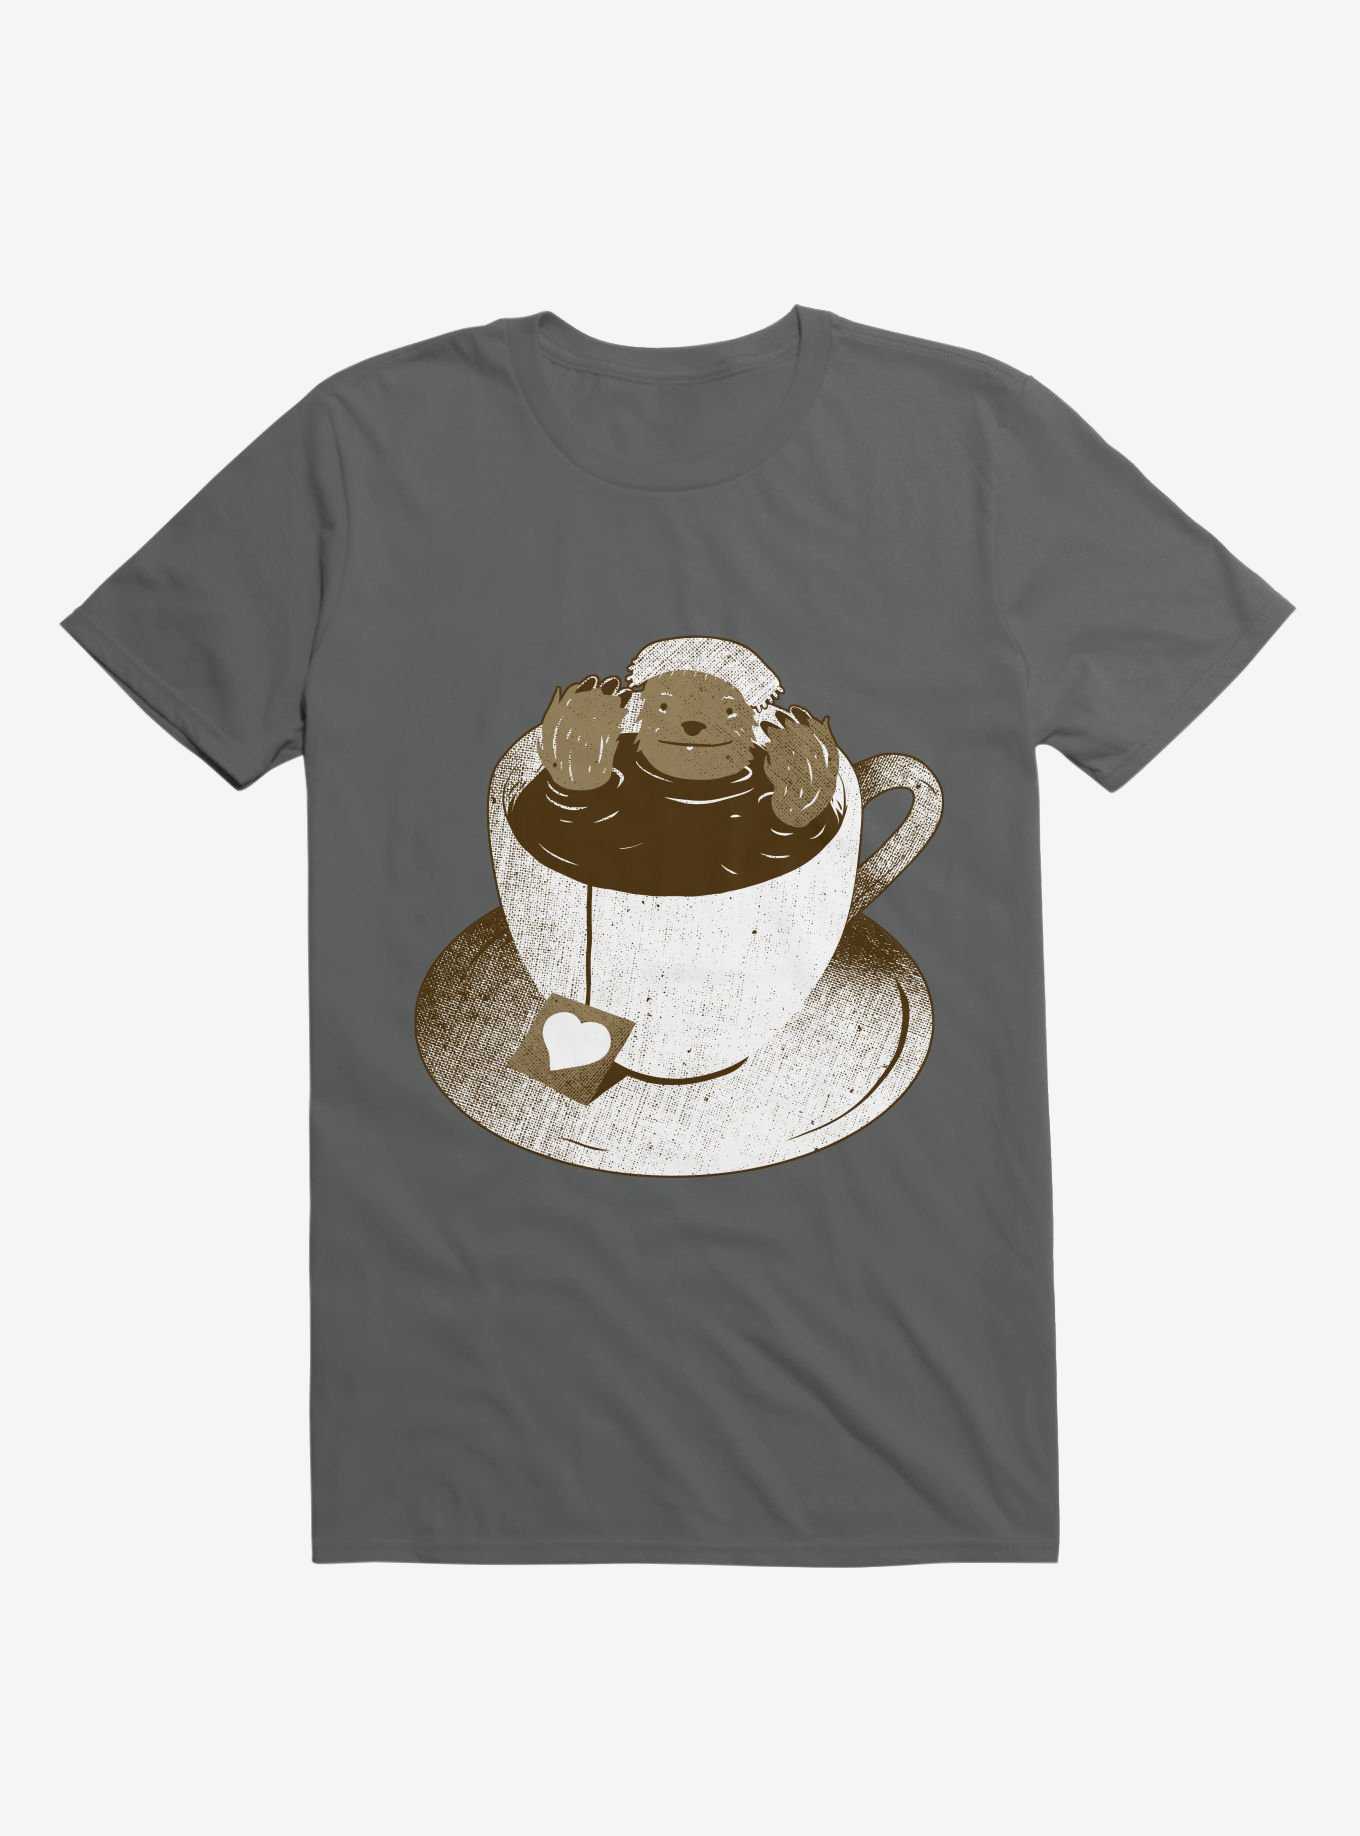 Monday Bath Sloth Coffee Charcoal Grey T-Shirt, , hi-res